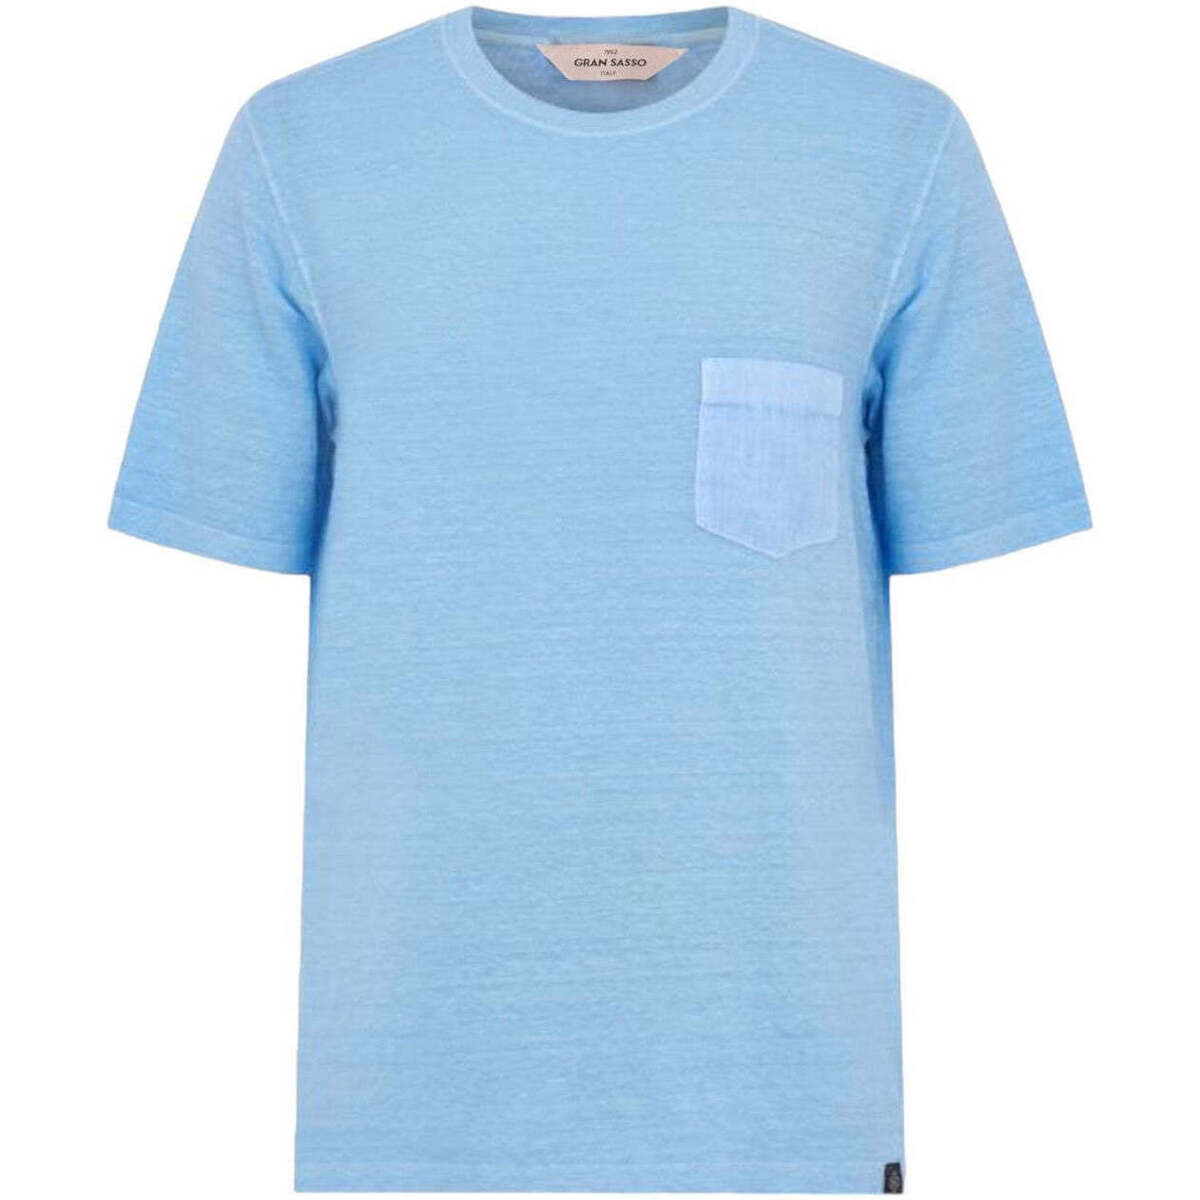 Vêtements Homme Jack Wills Radar Long Sleeve T-Shirt  Bleu